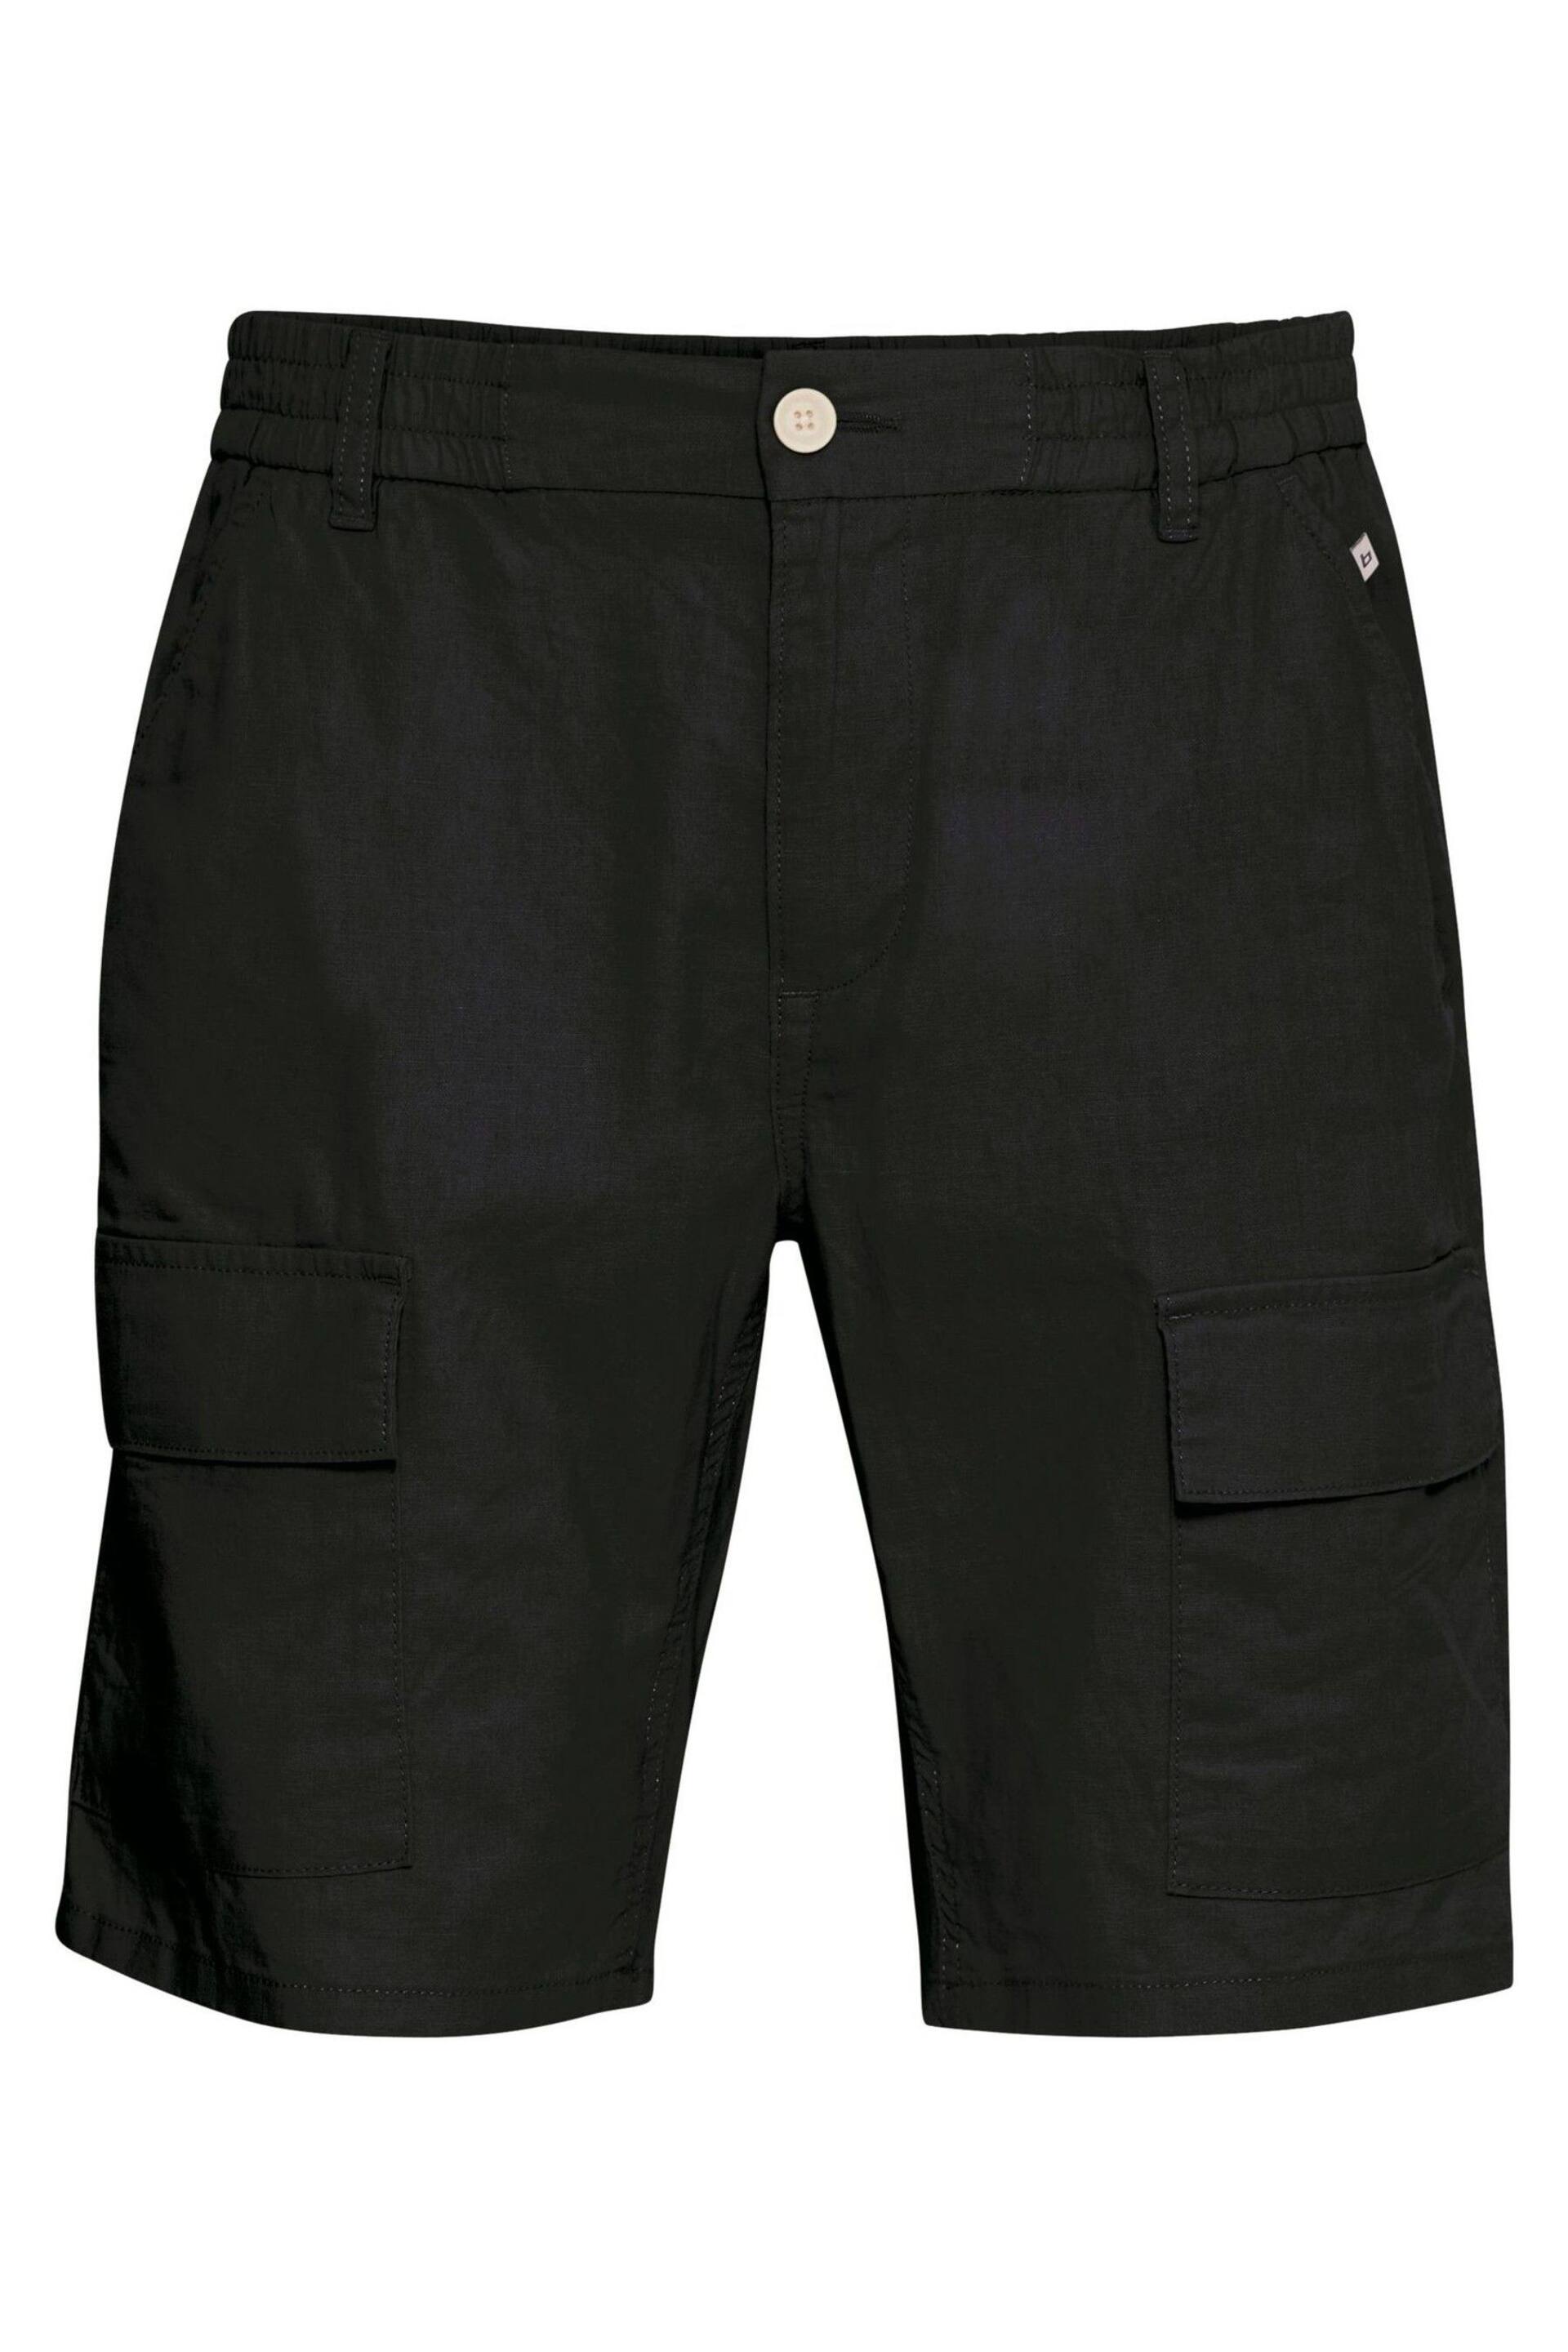 Blend Black Linen Cargo Shorts - Image 5 of 5